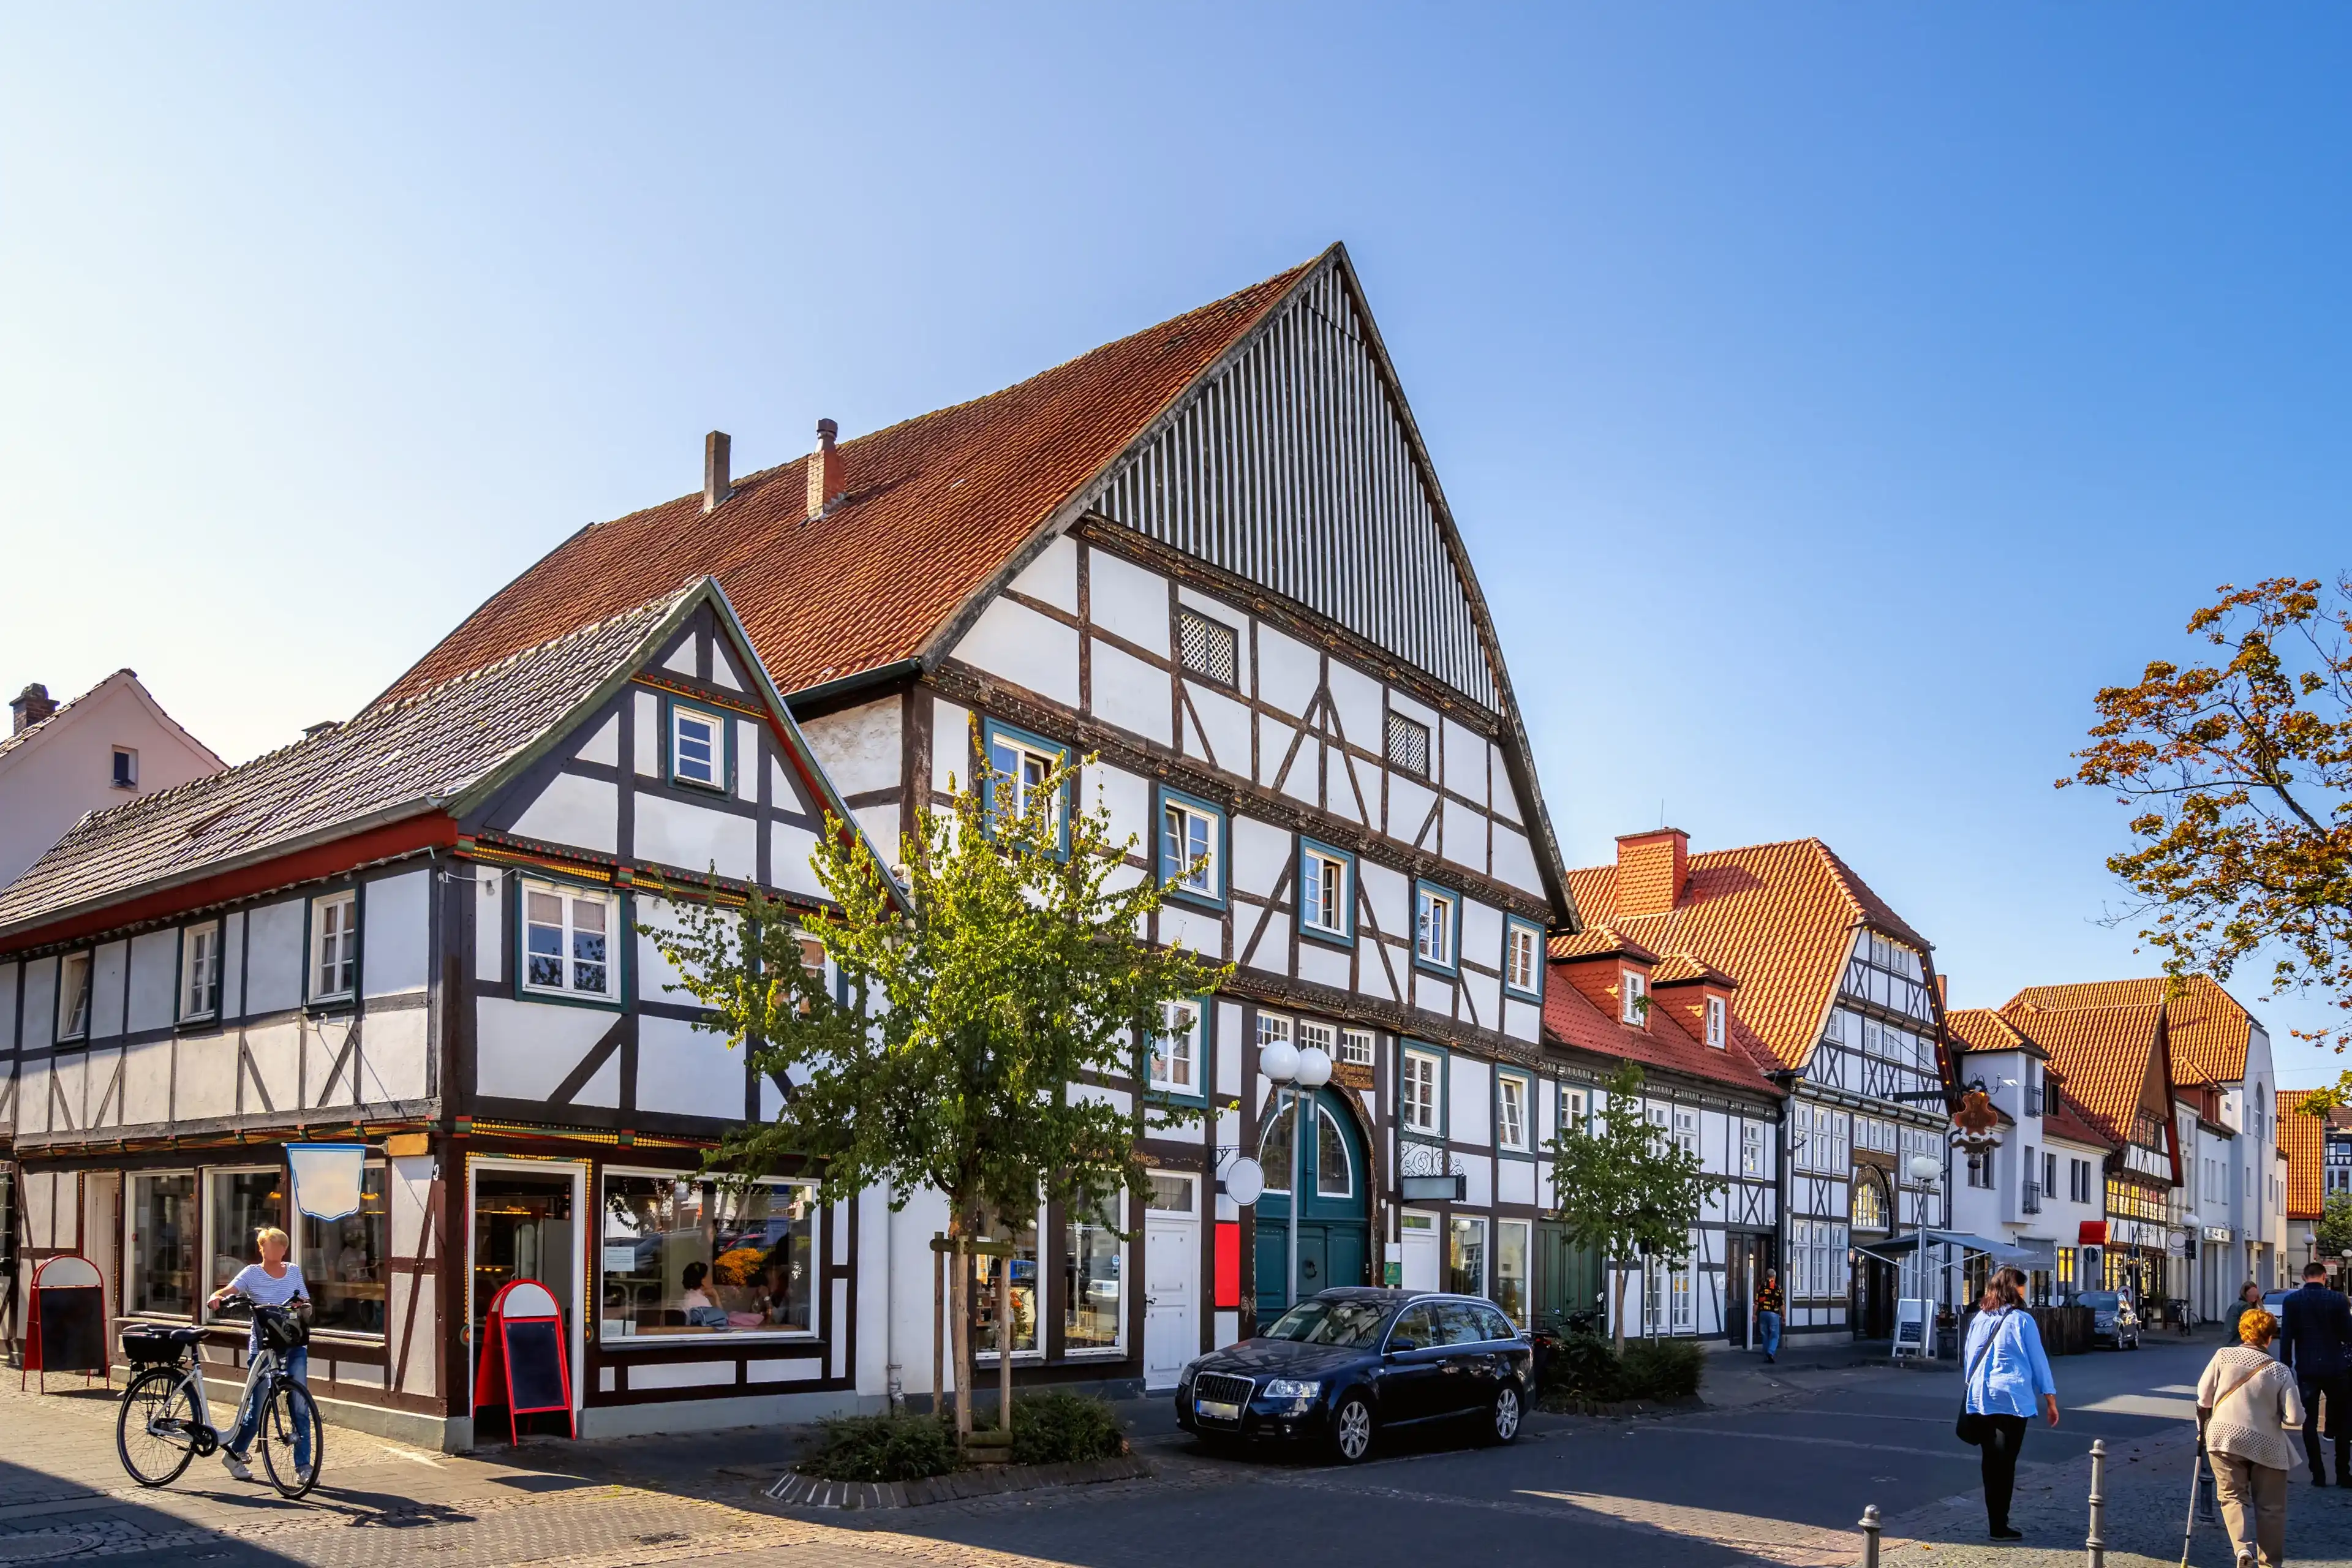 Best Lippstadt hotels. Cheap hotels in Lippstadt, Germany